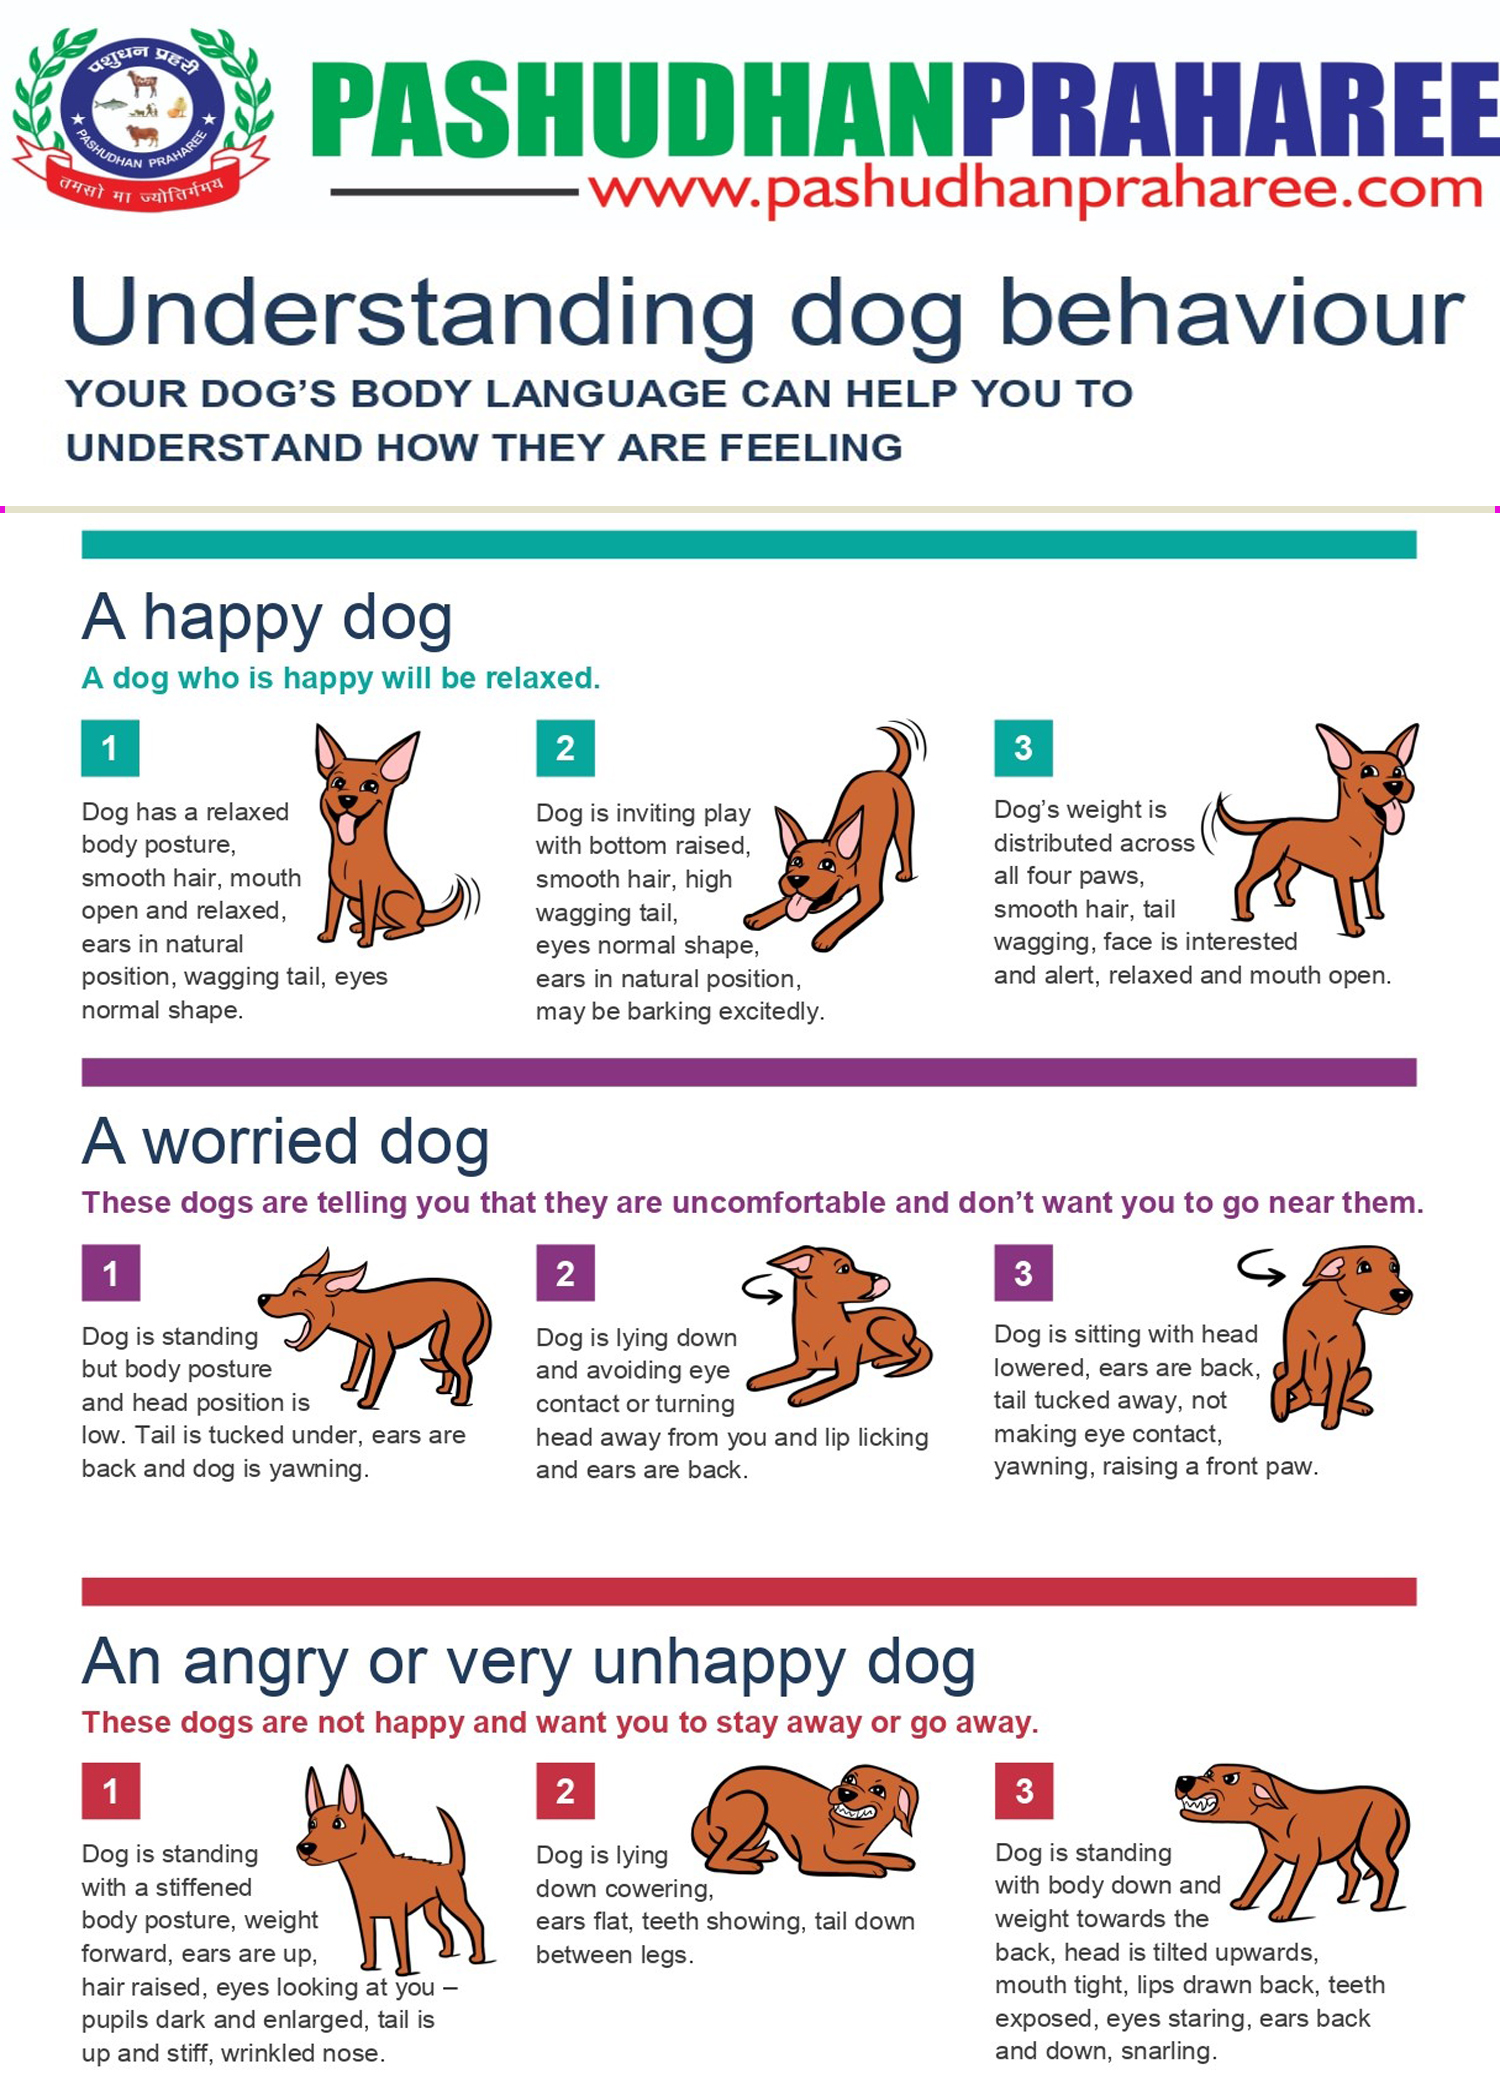 IV. Debunking Dog Behaviour Myths